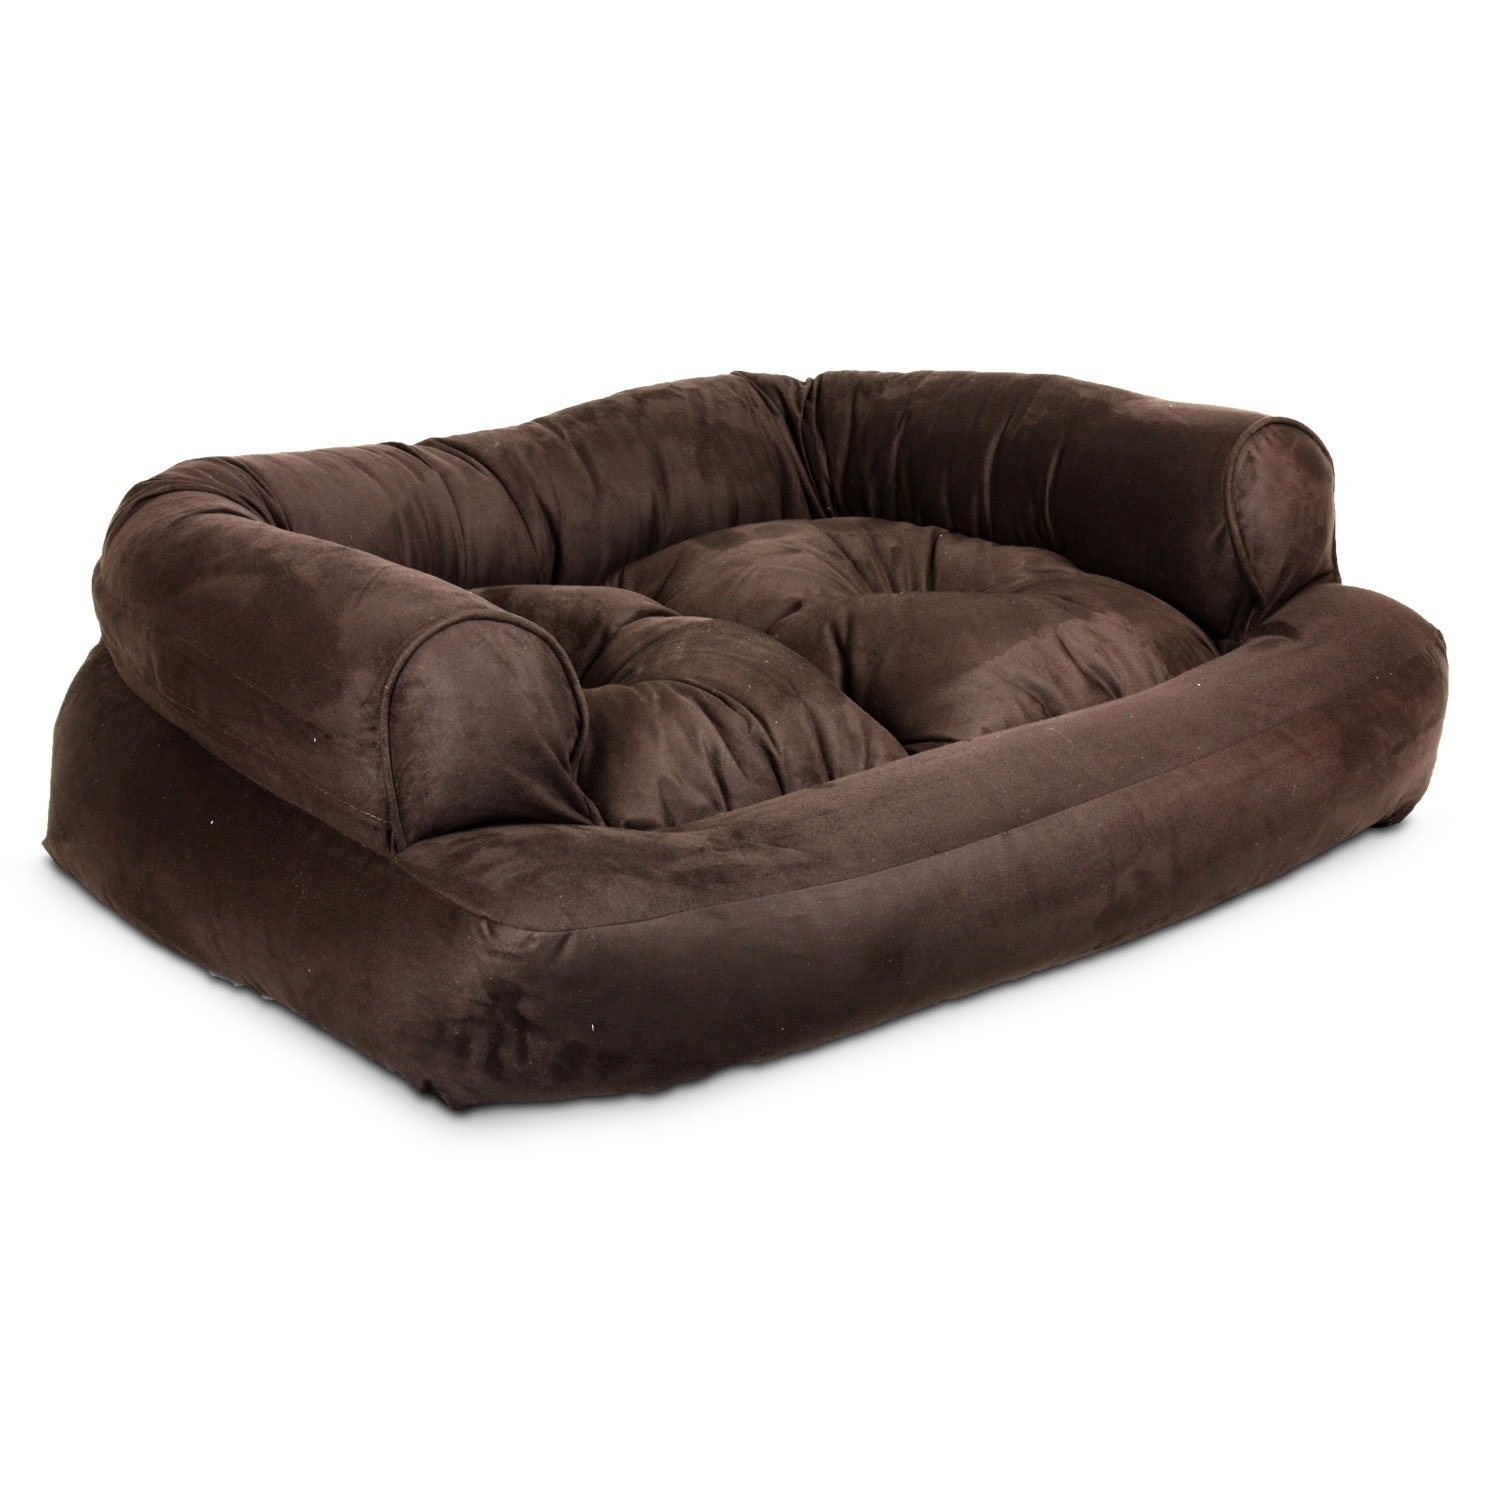 Snoozer luxury overstuffed sofa in hot fudge x large 54